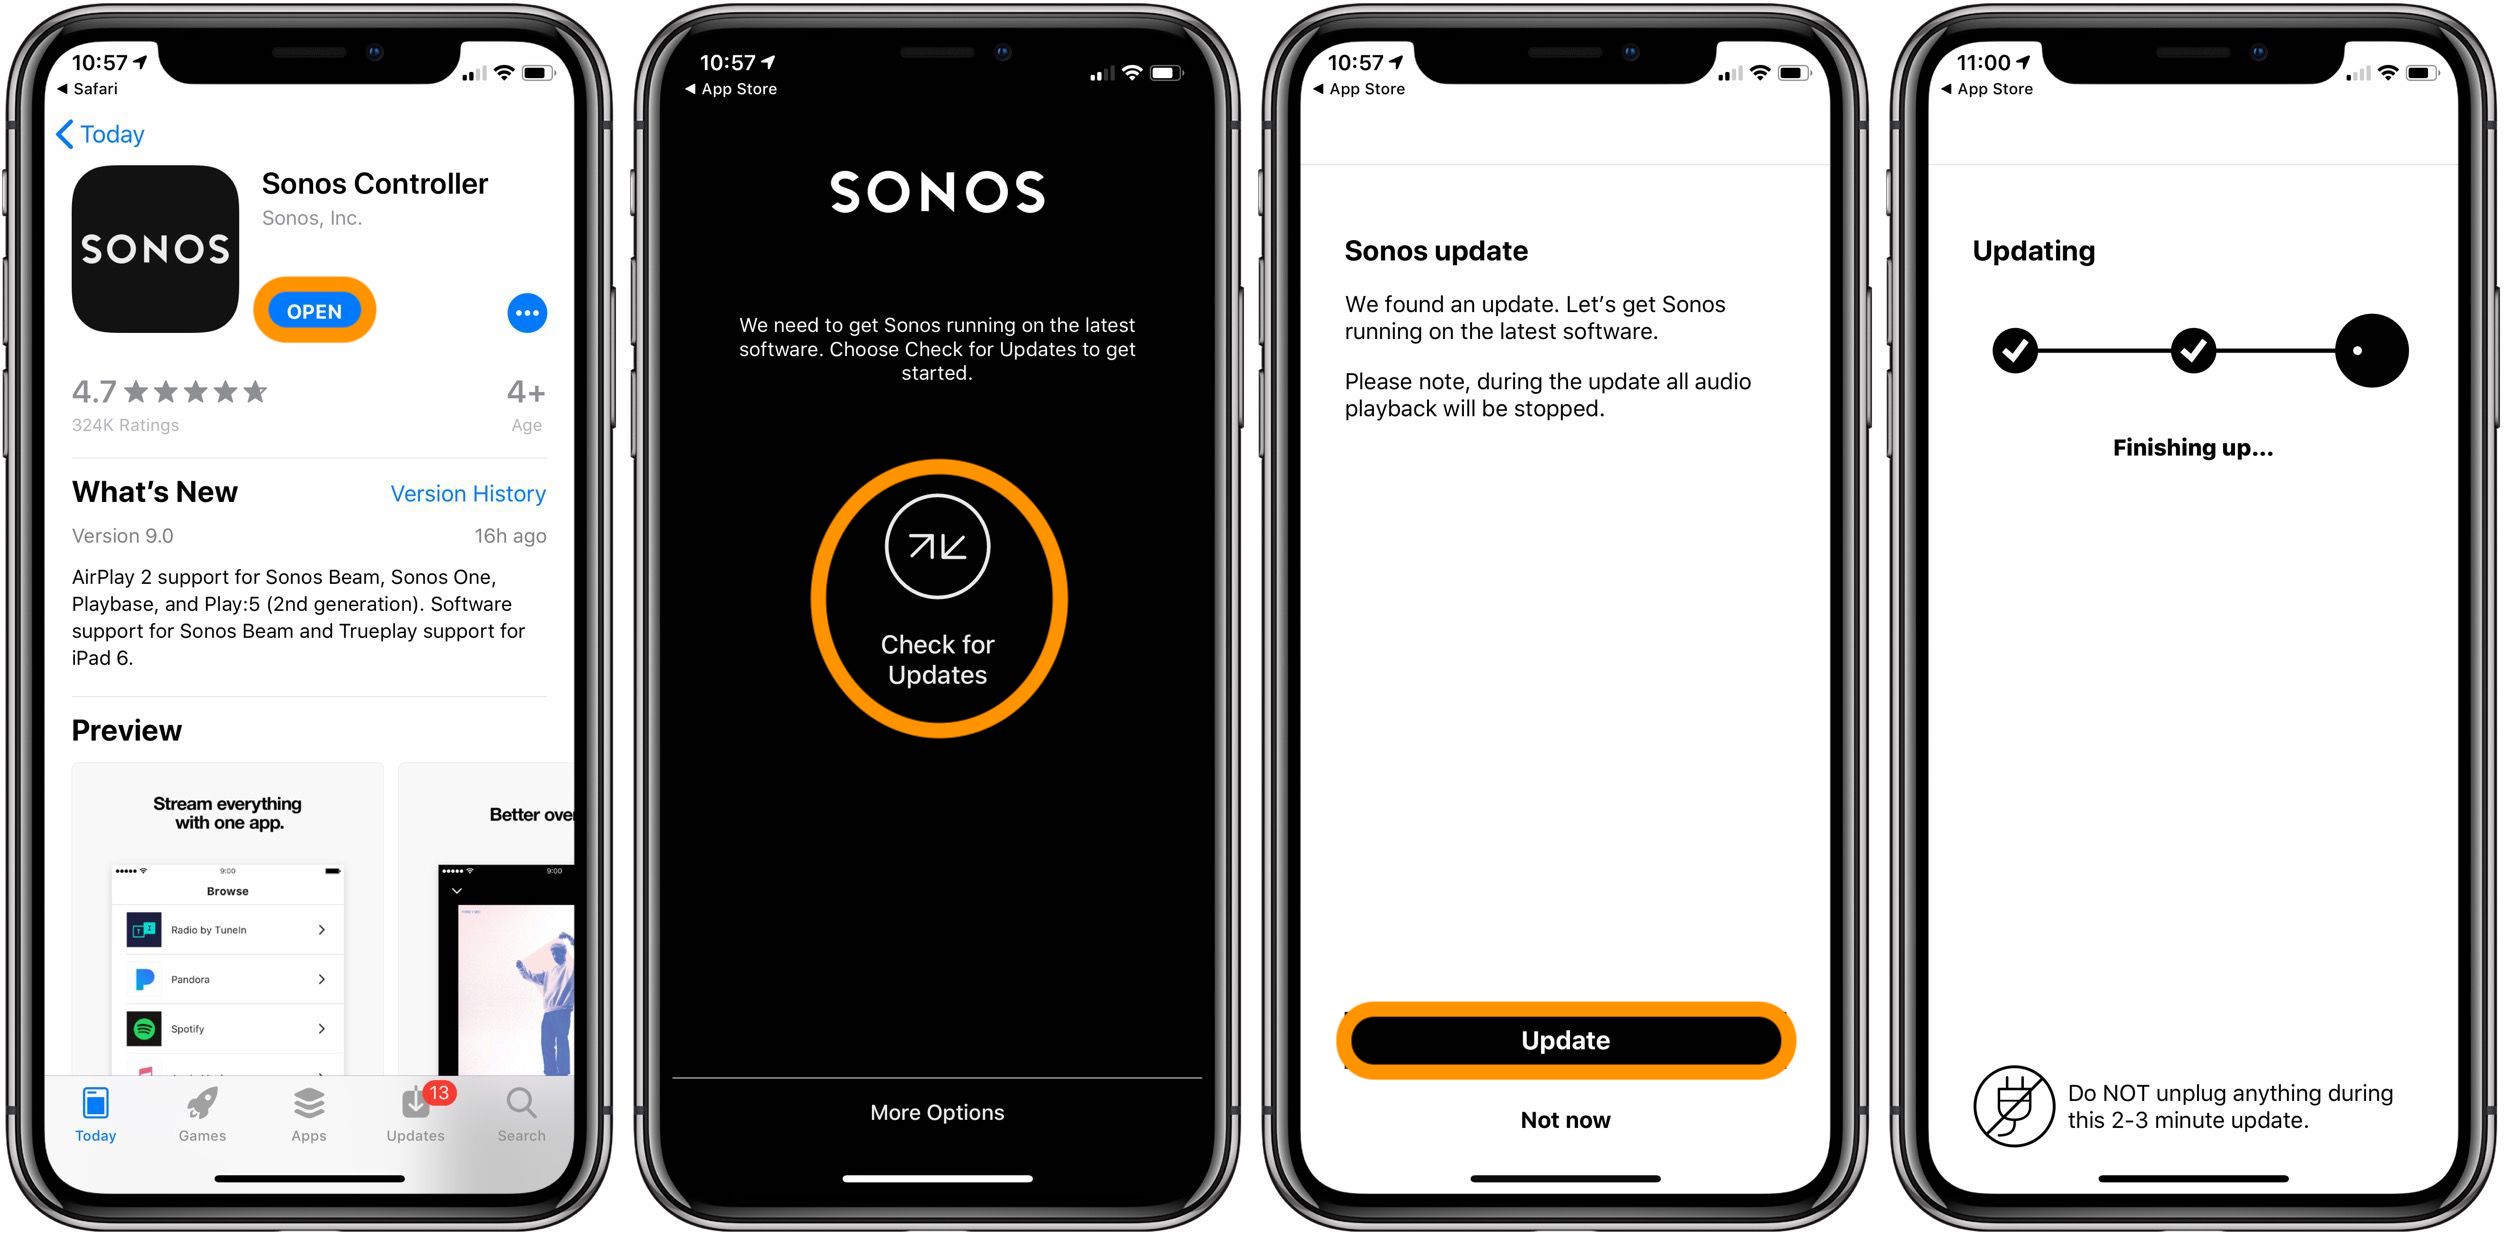 sonos software cannot add music folder